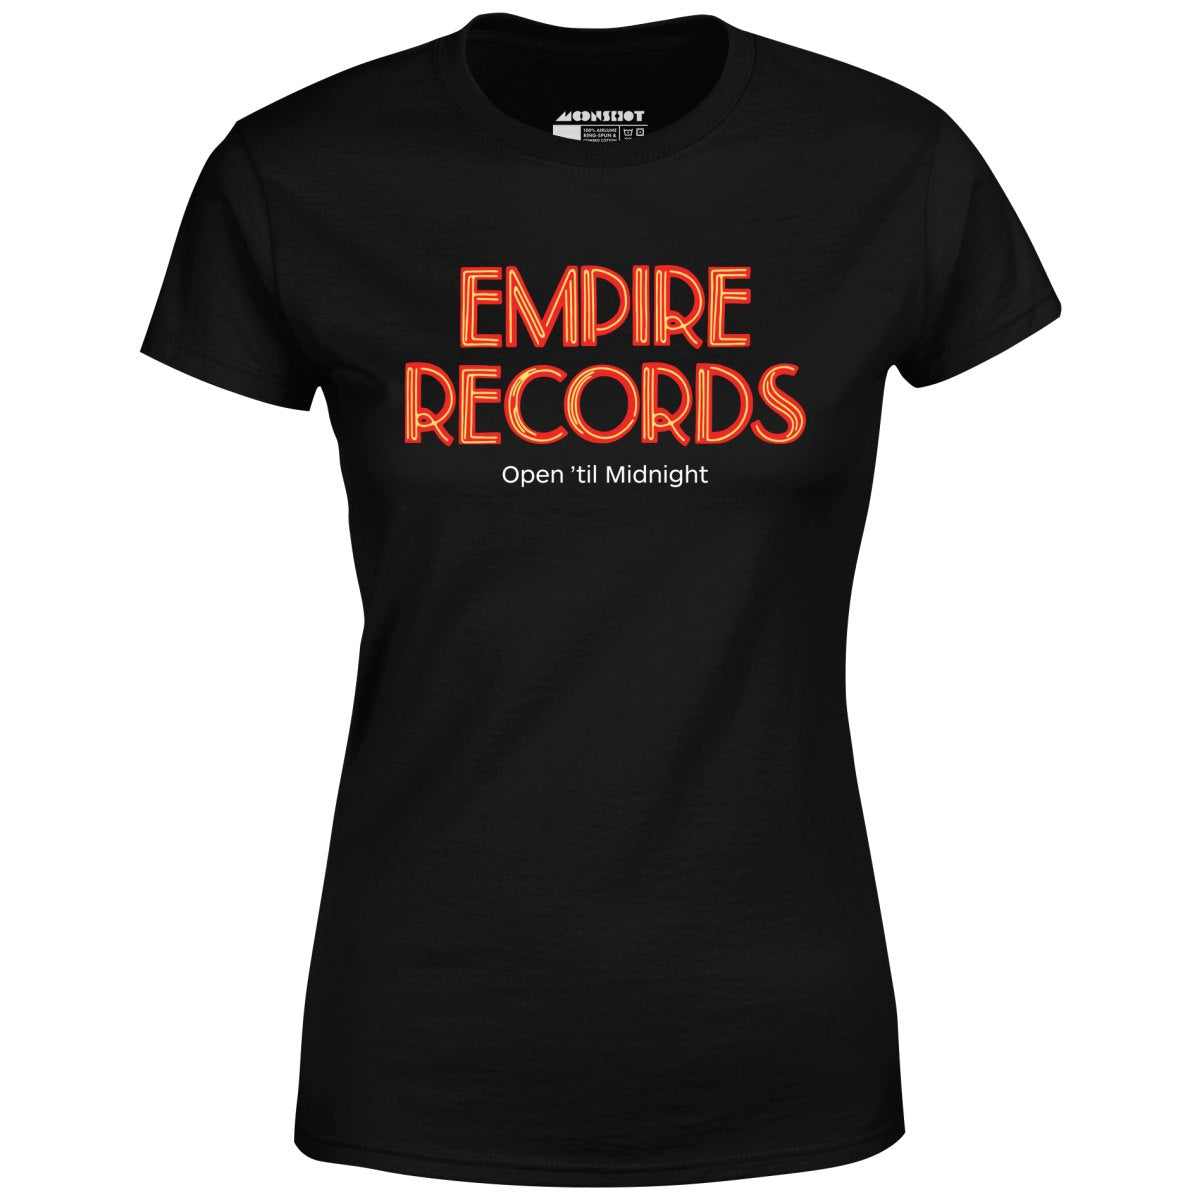 Empire Records - Women's T-Shirt